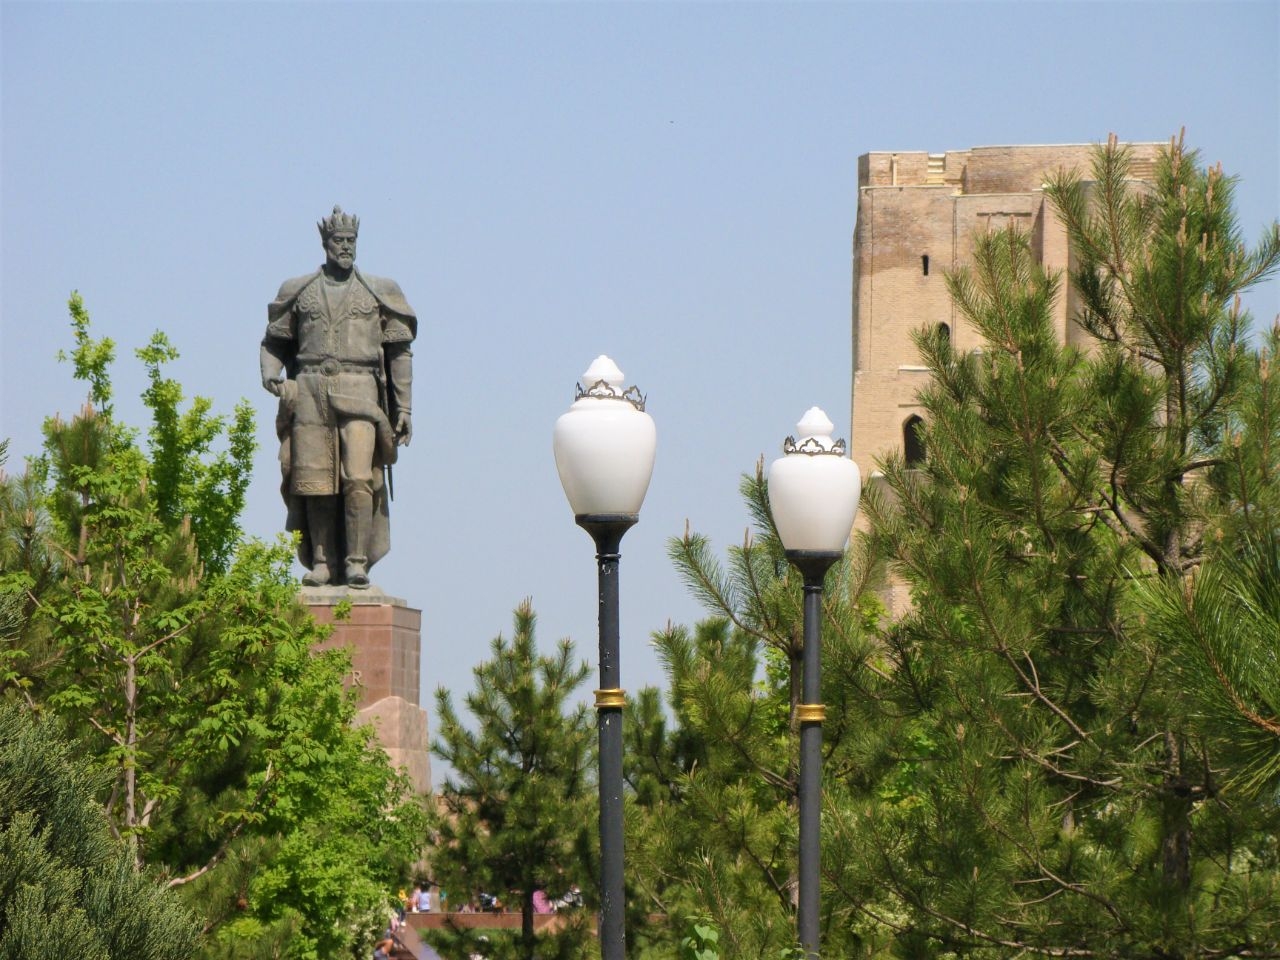 Исторический центр города Шахрисабз Шахрисабз, Узбекистан